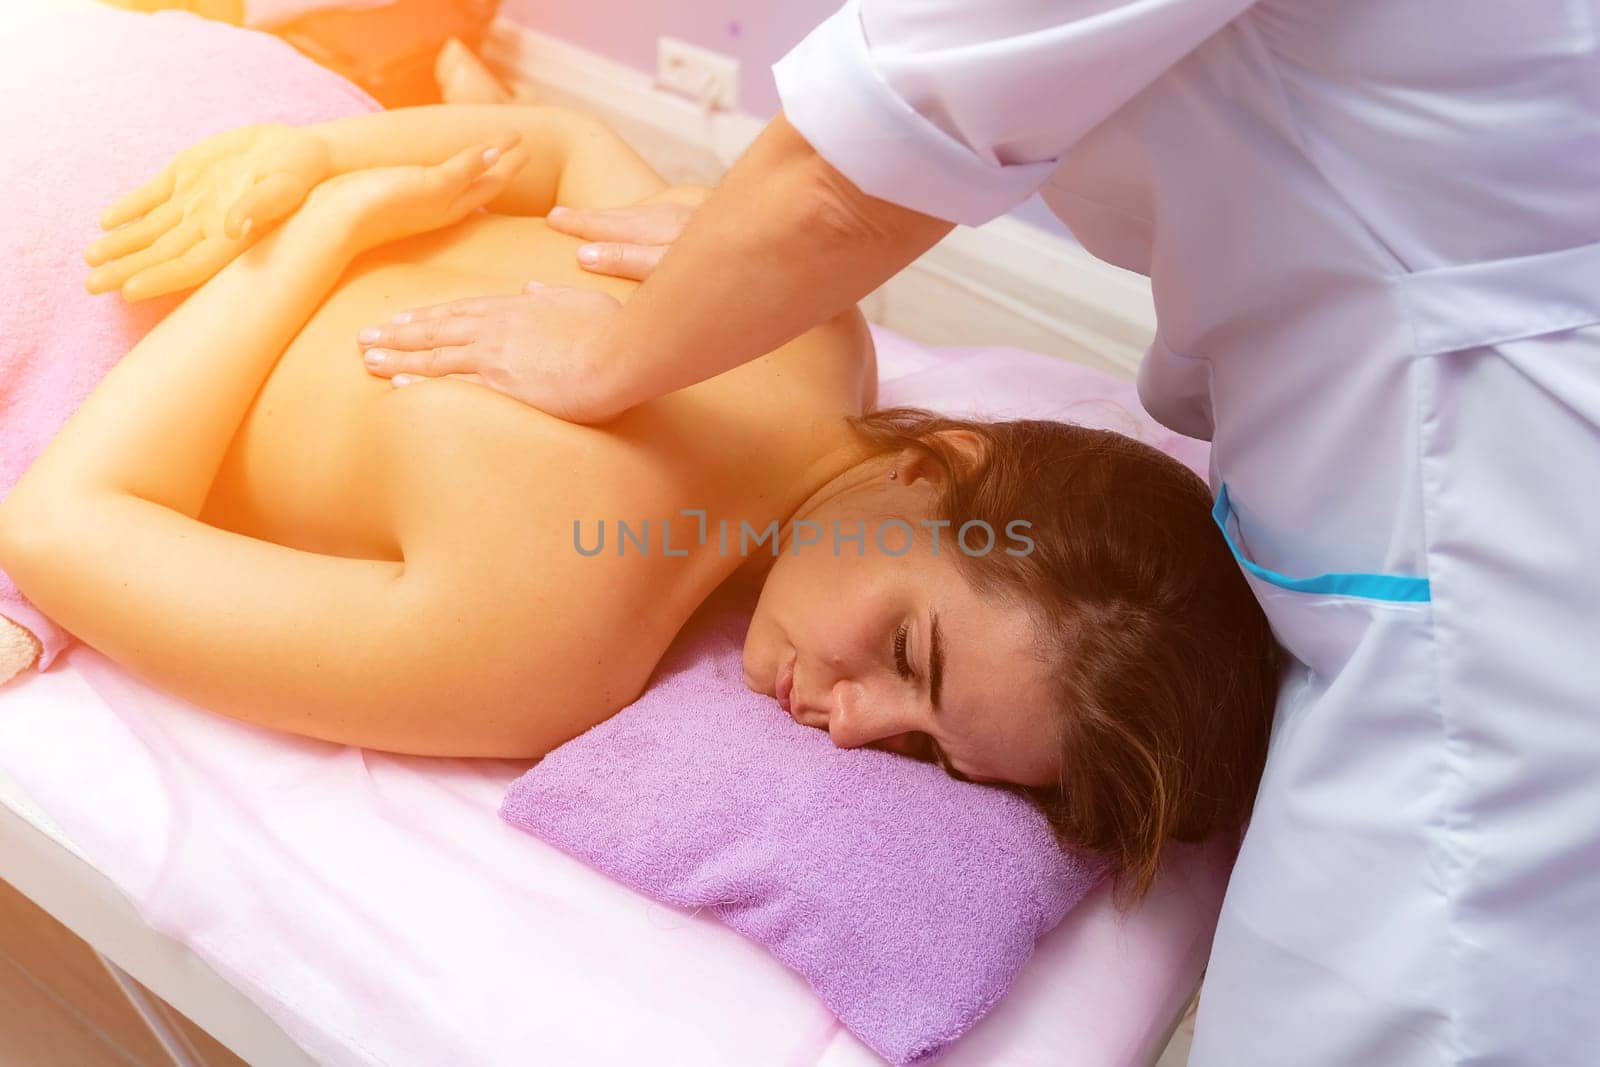 Blonde massage therapist massaging a woman. Woman getting a massage at the spa.